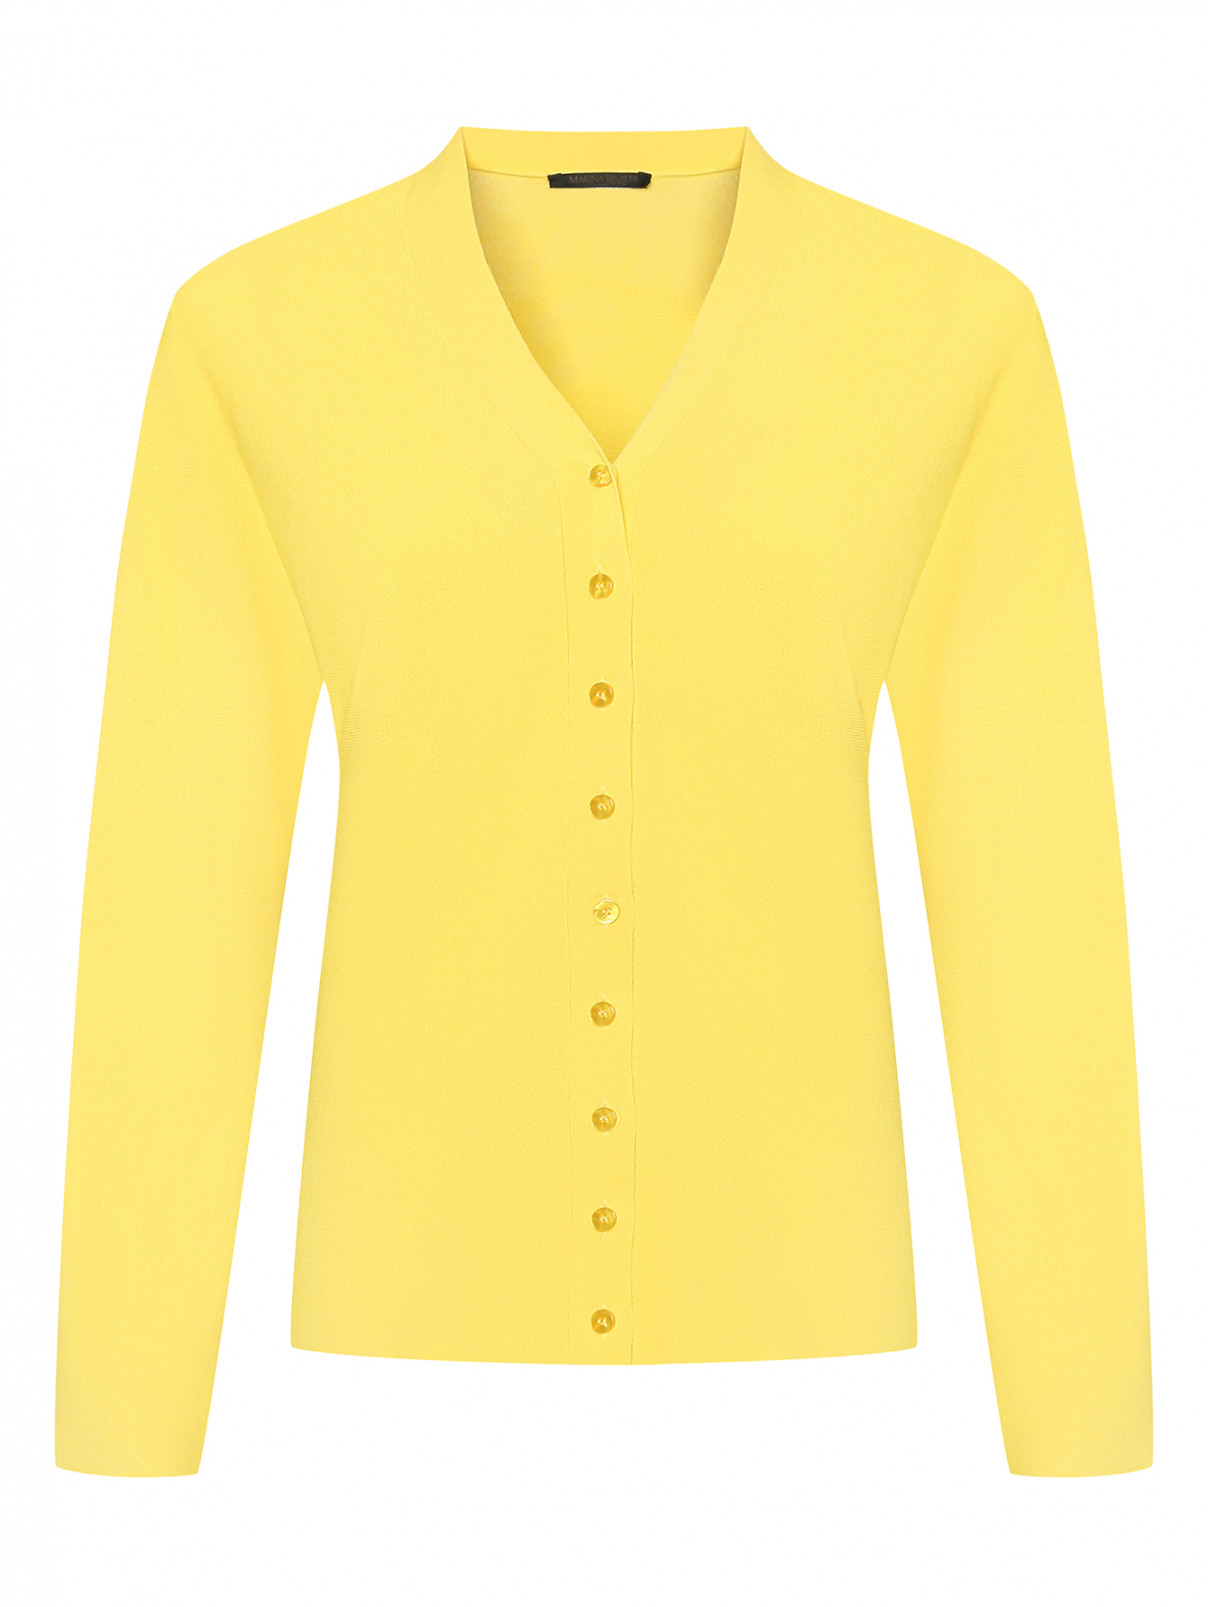 Трикотажный однотонный кардиган Marina Rinaldi  –  Общий вид  – Цвет:  Желтый